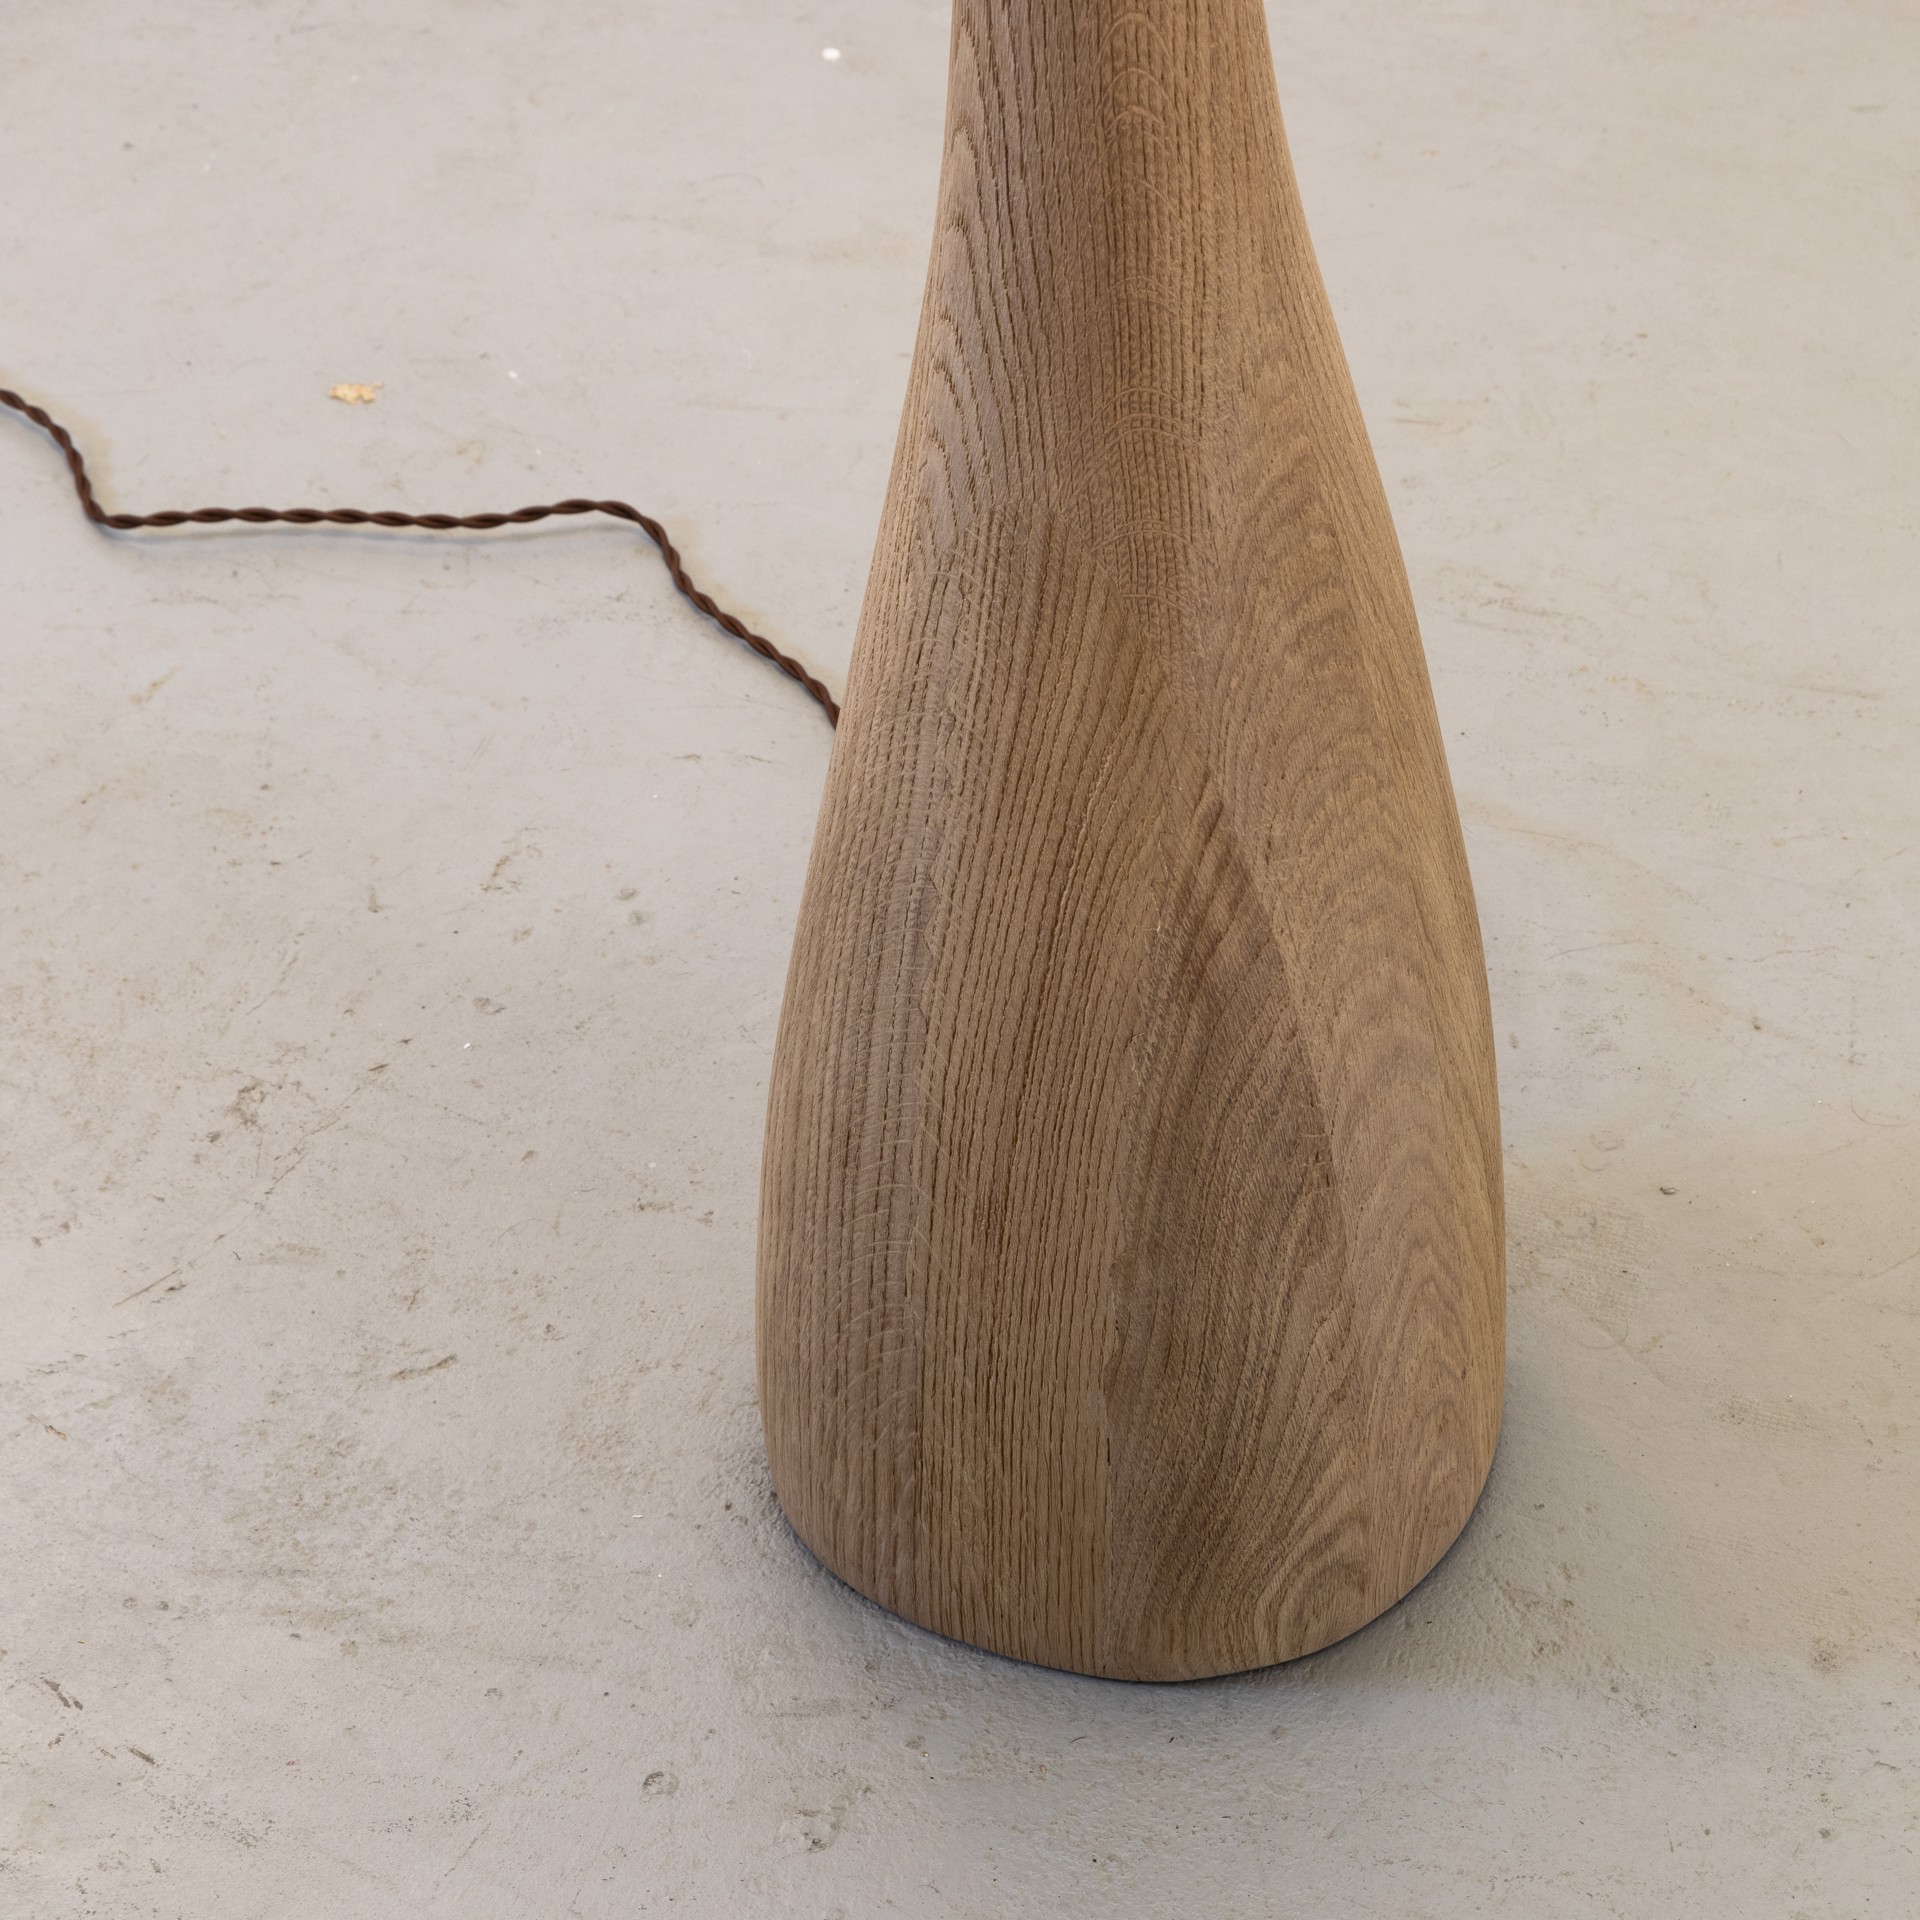 Floor lamp "Leda" by Jacques Jarrige